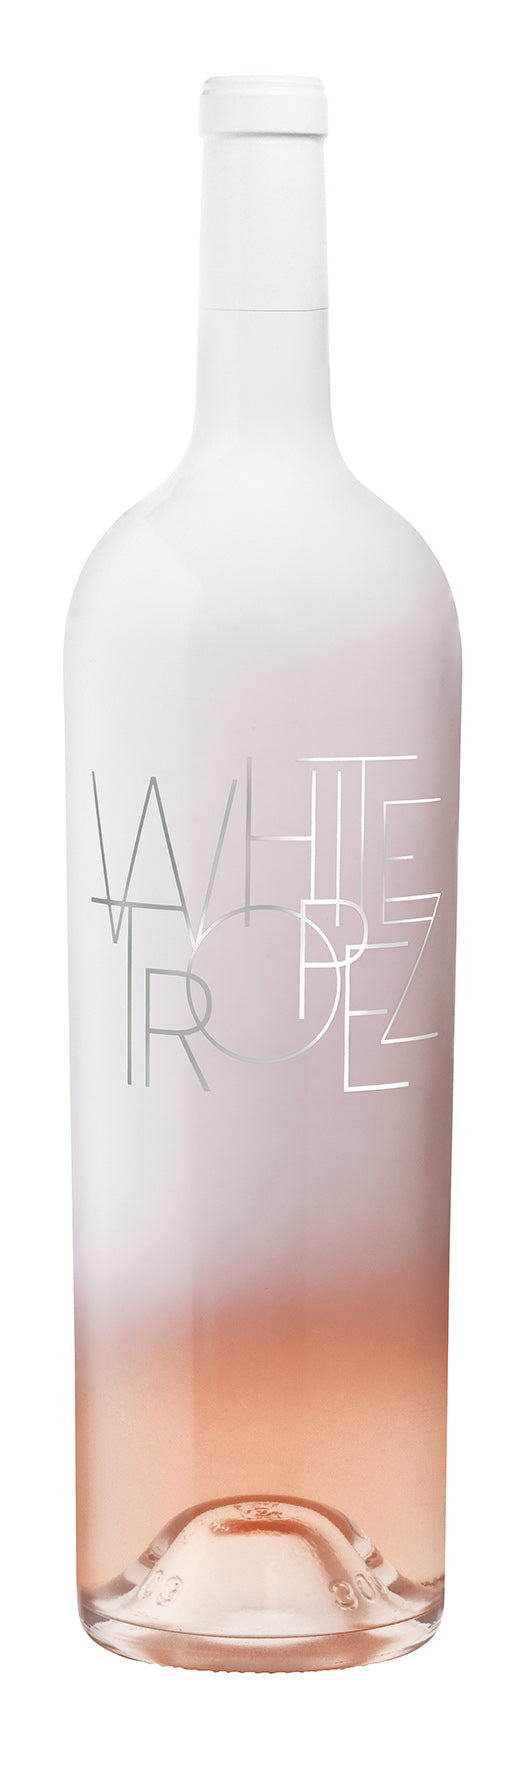 White Tropez Jeroboam 3-Liter